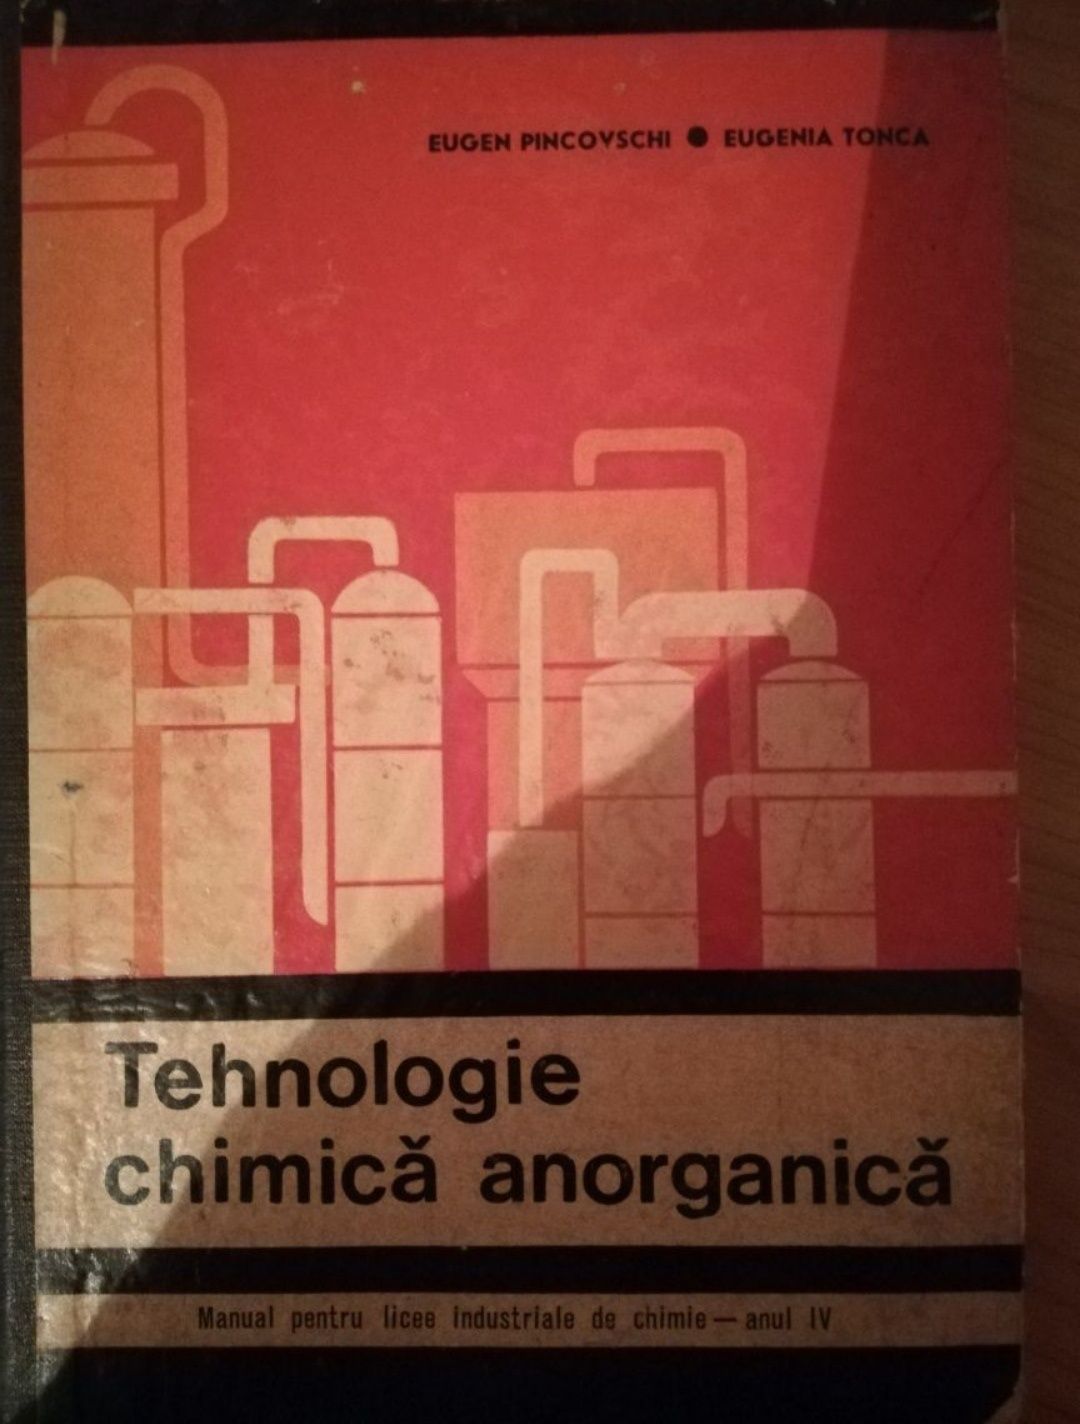 Tehnologie chimica anorganica - Eugen Pincovschi, Eugenia Tonica